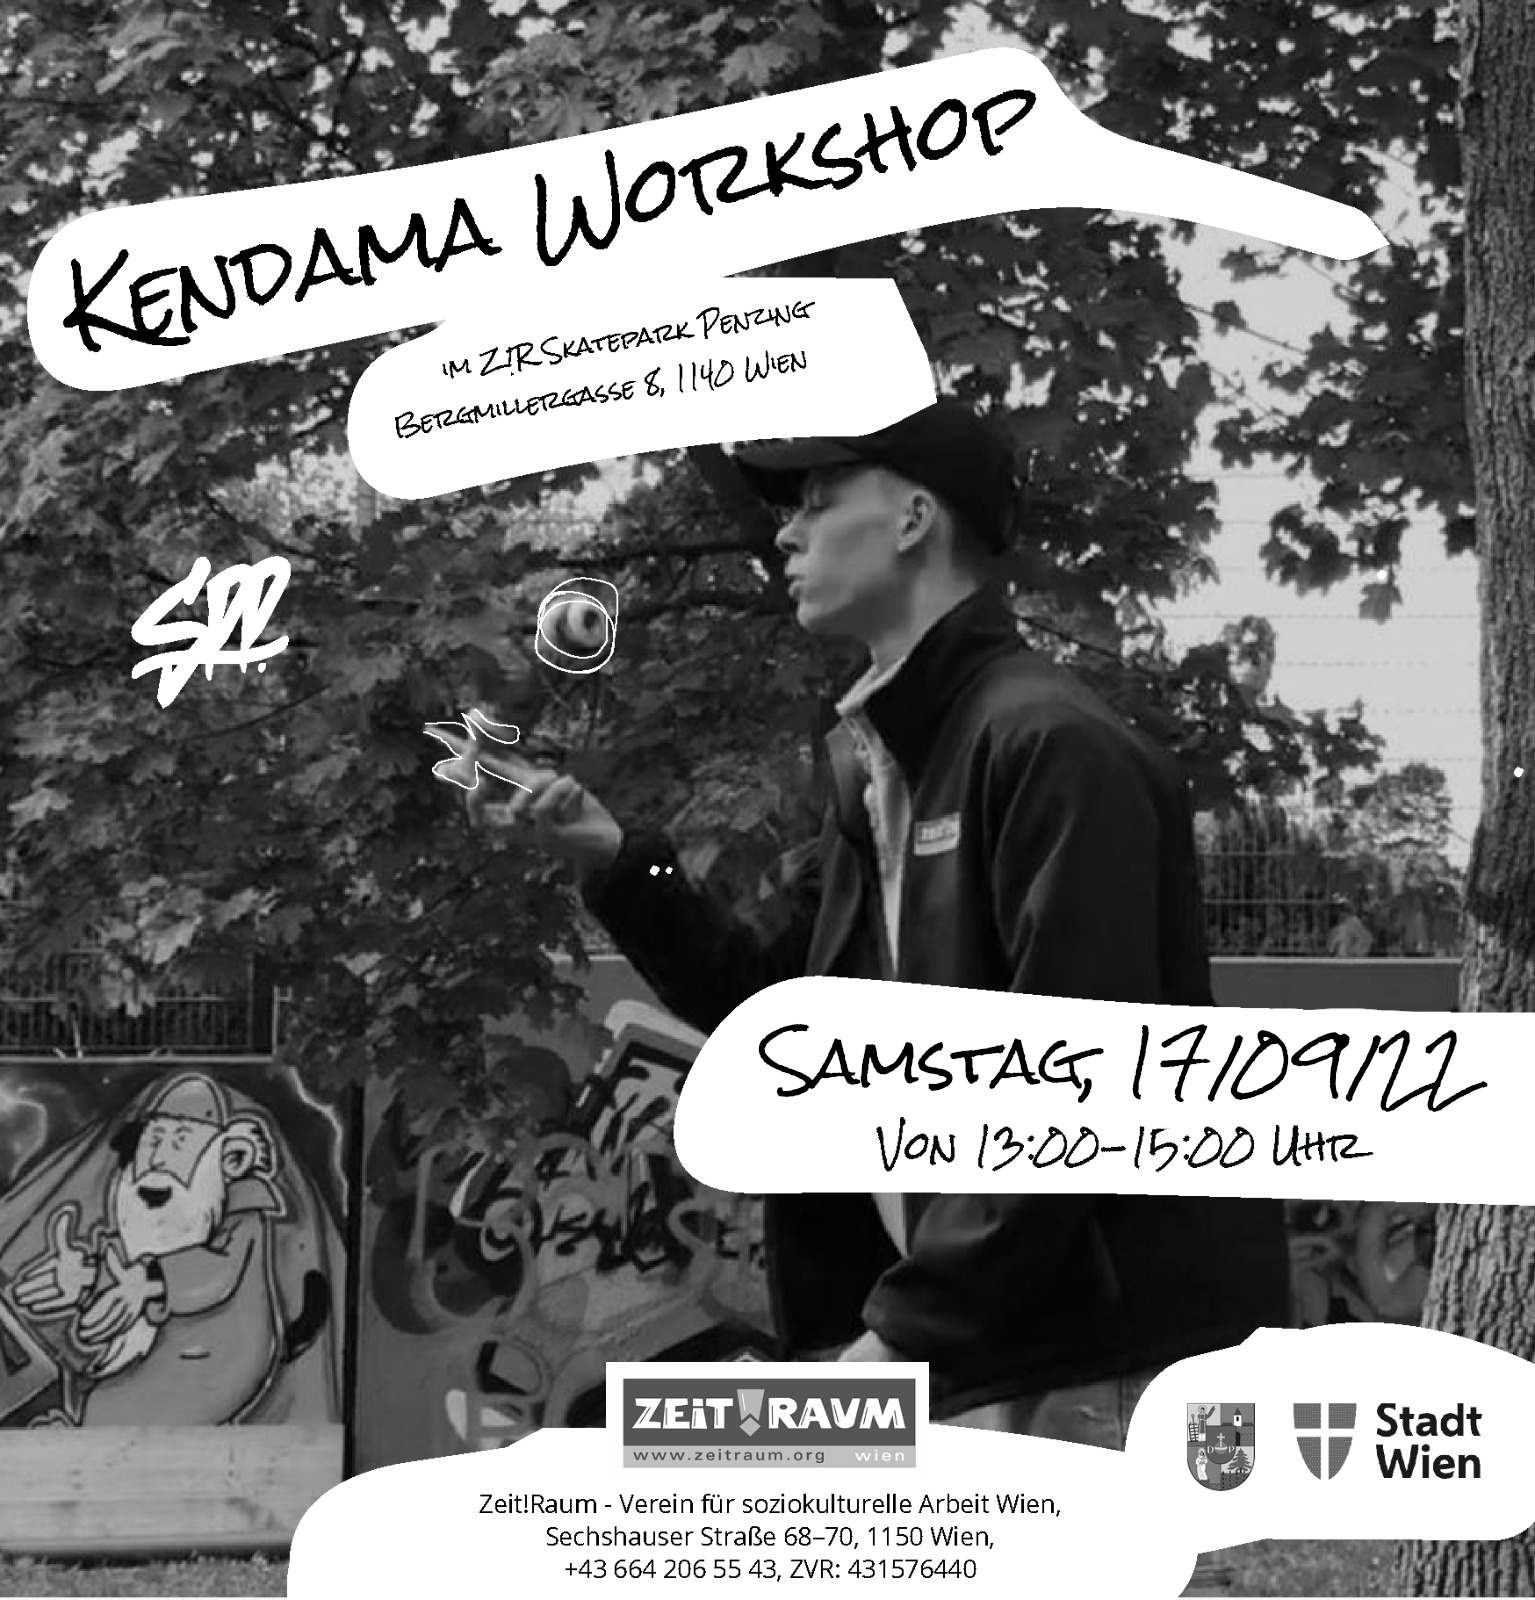 Kendama_Workshop_17_09